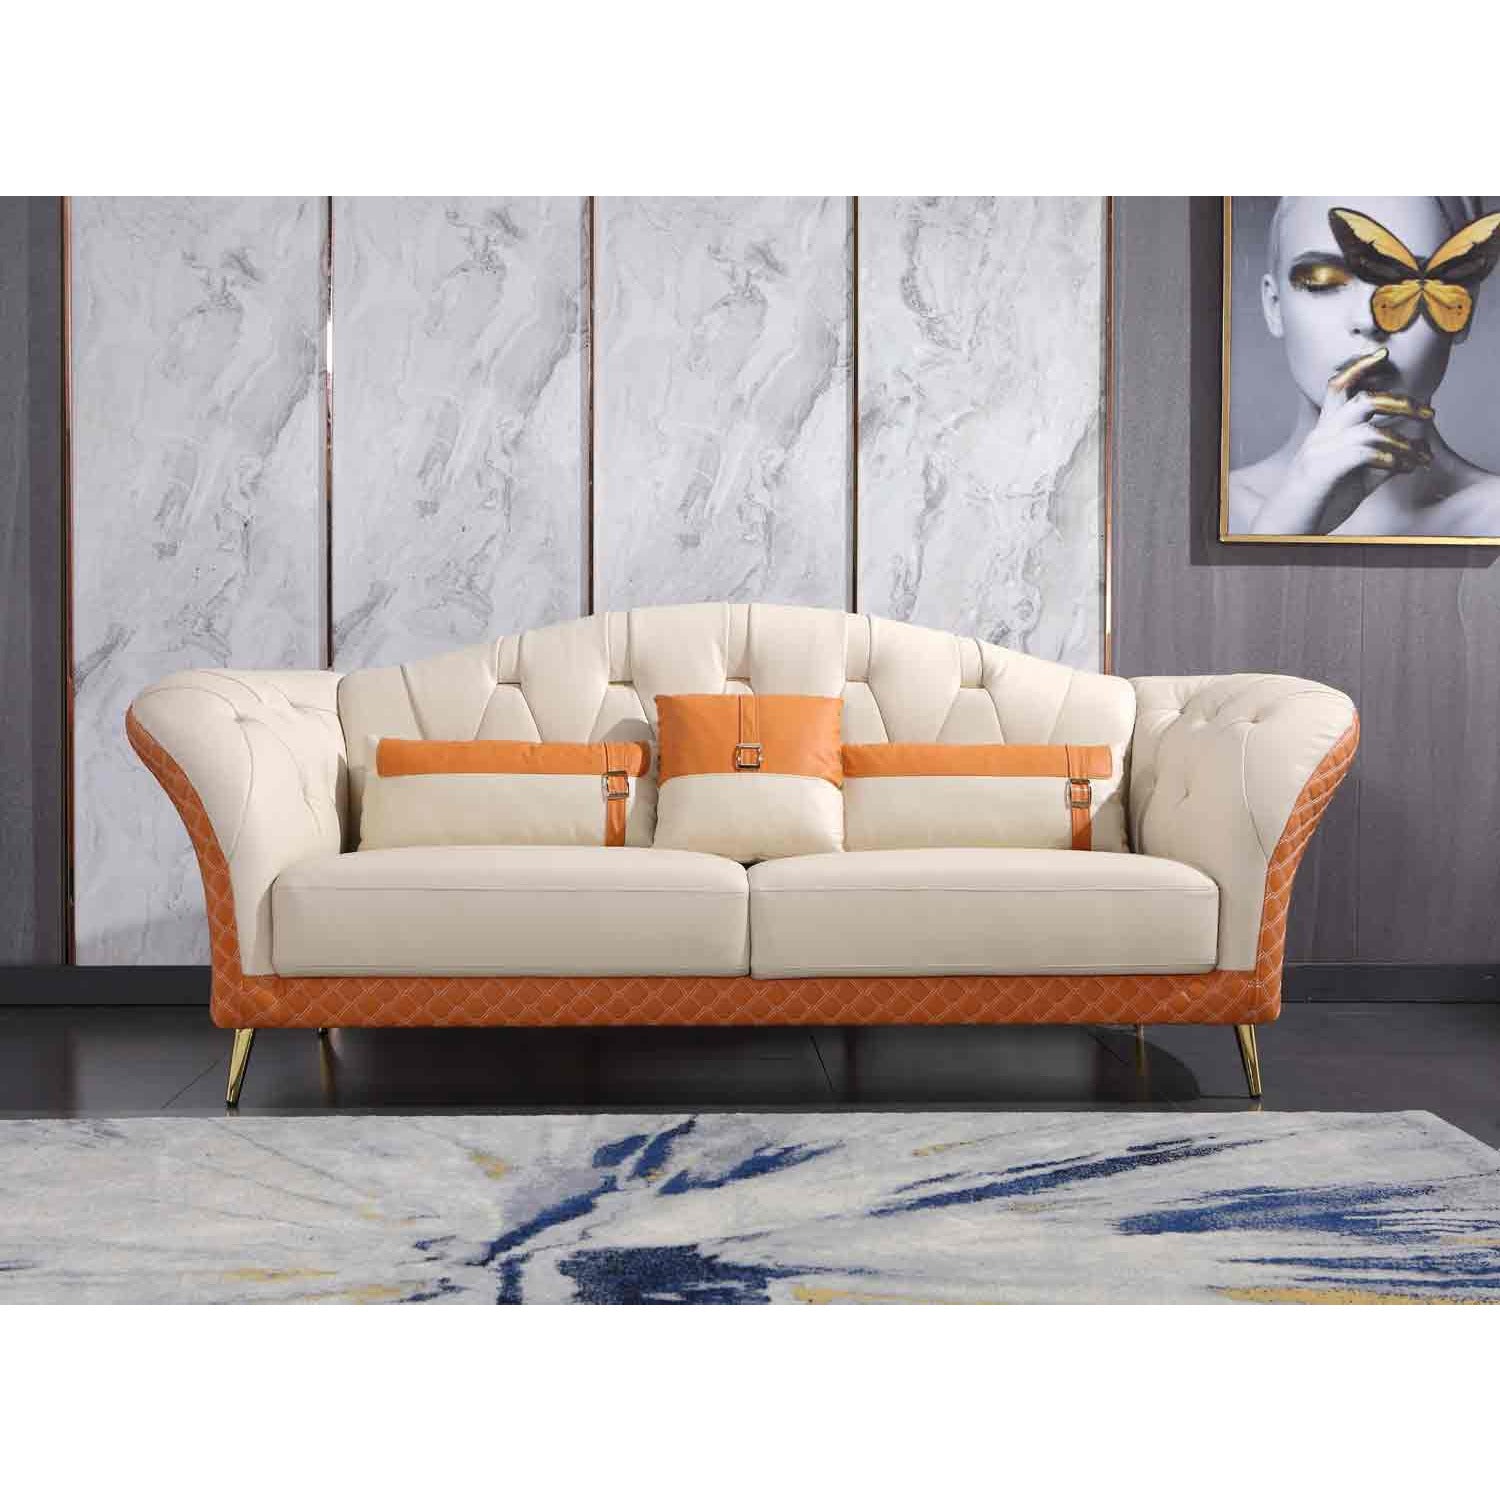 European Furniture - Amalia Sofa in White-Orange - 28040-S - New Star Living